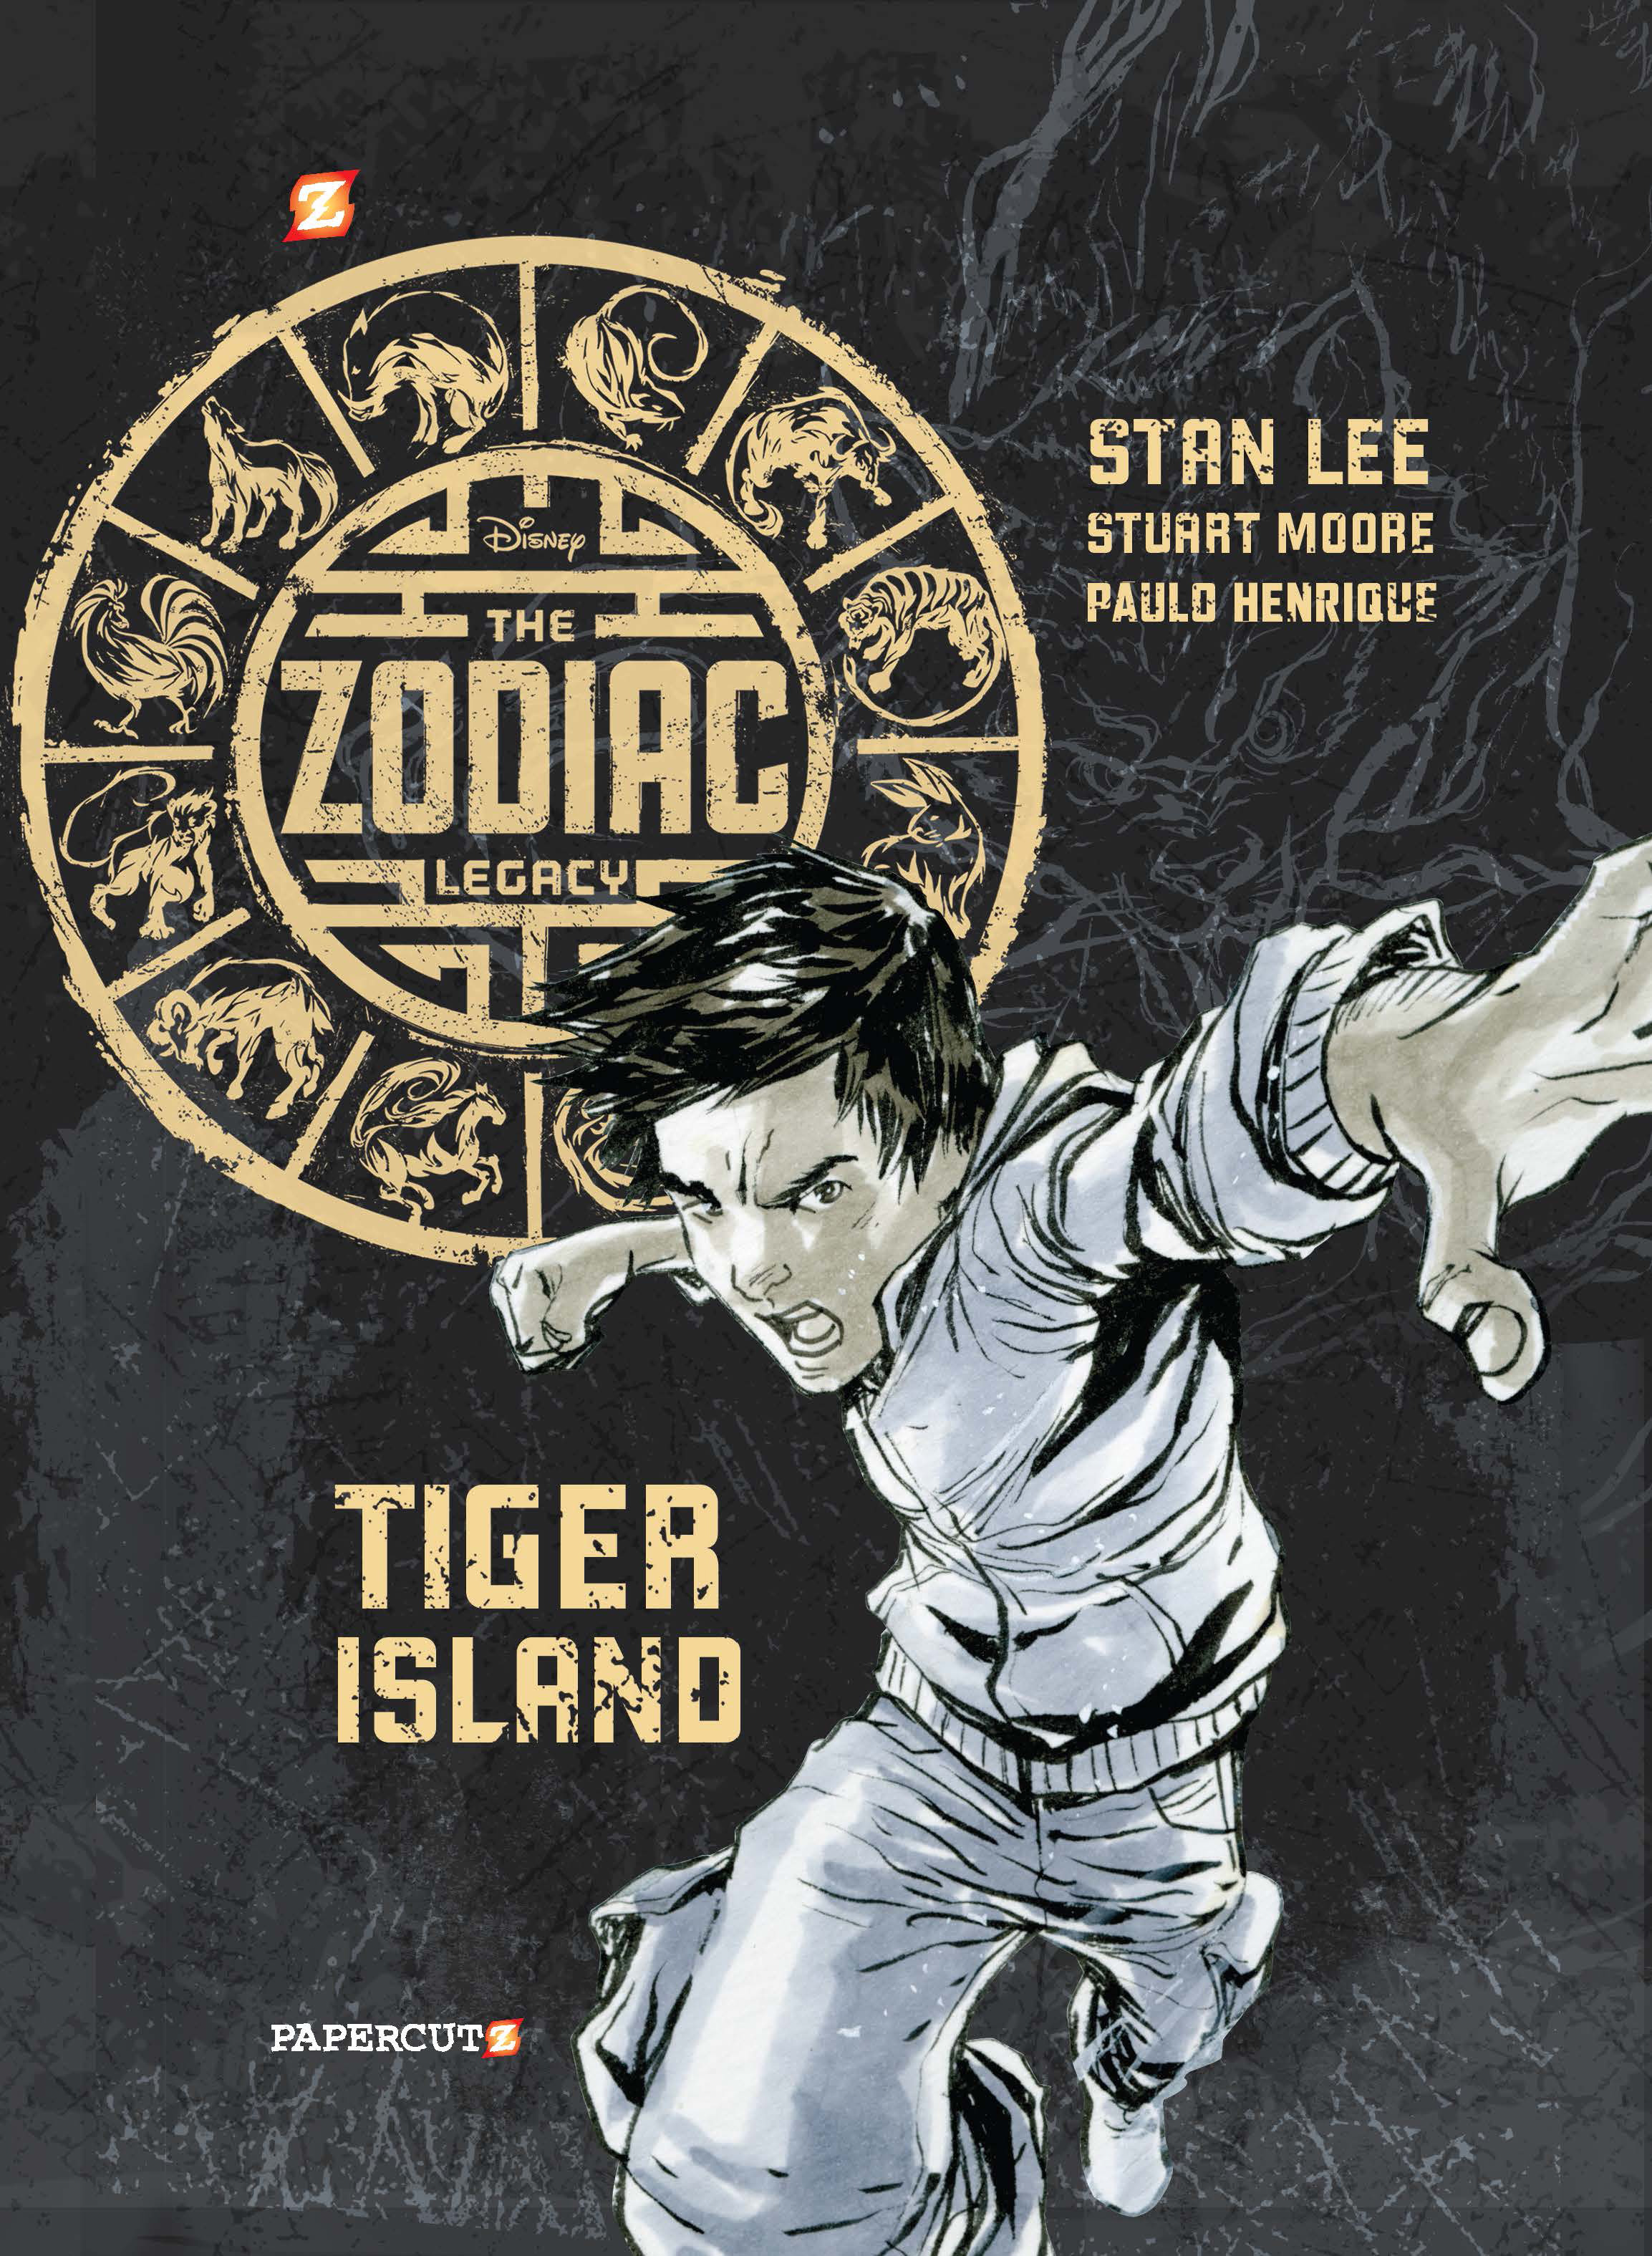 The Zodiac Legacy #1: Tiger Island